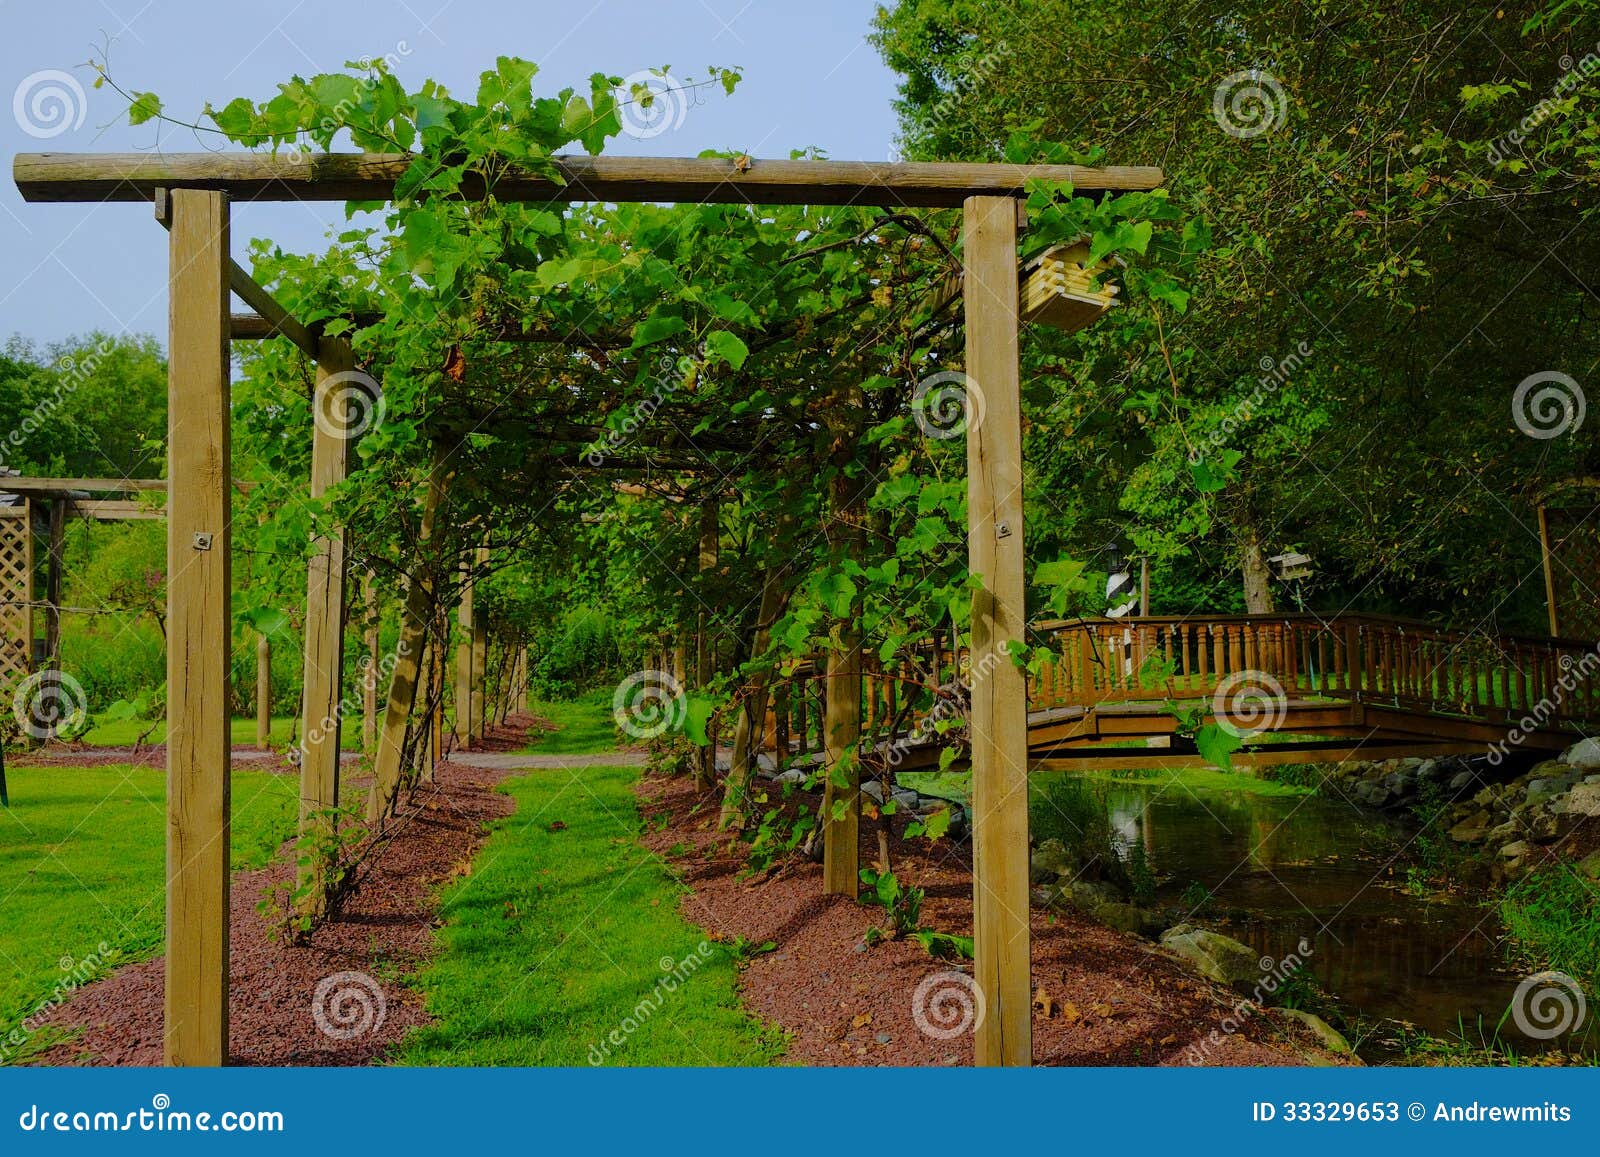 Path In Grape Arbor Stock Photos - Image: 33329653